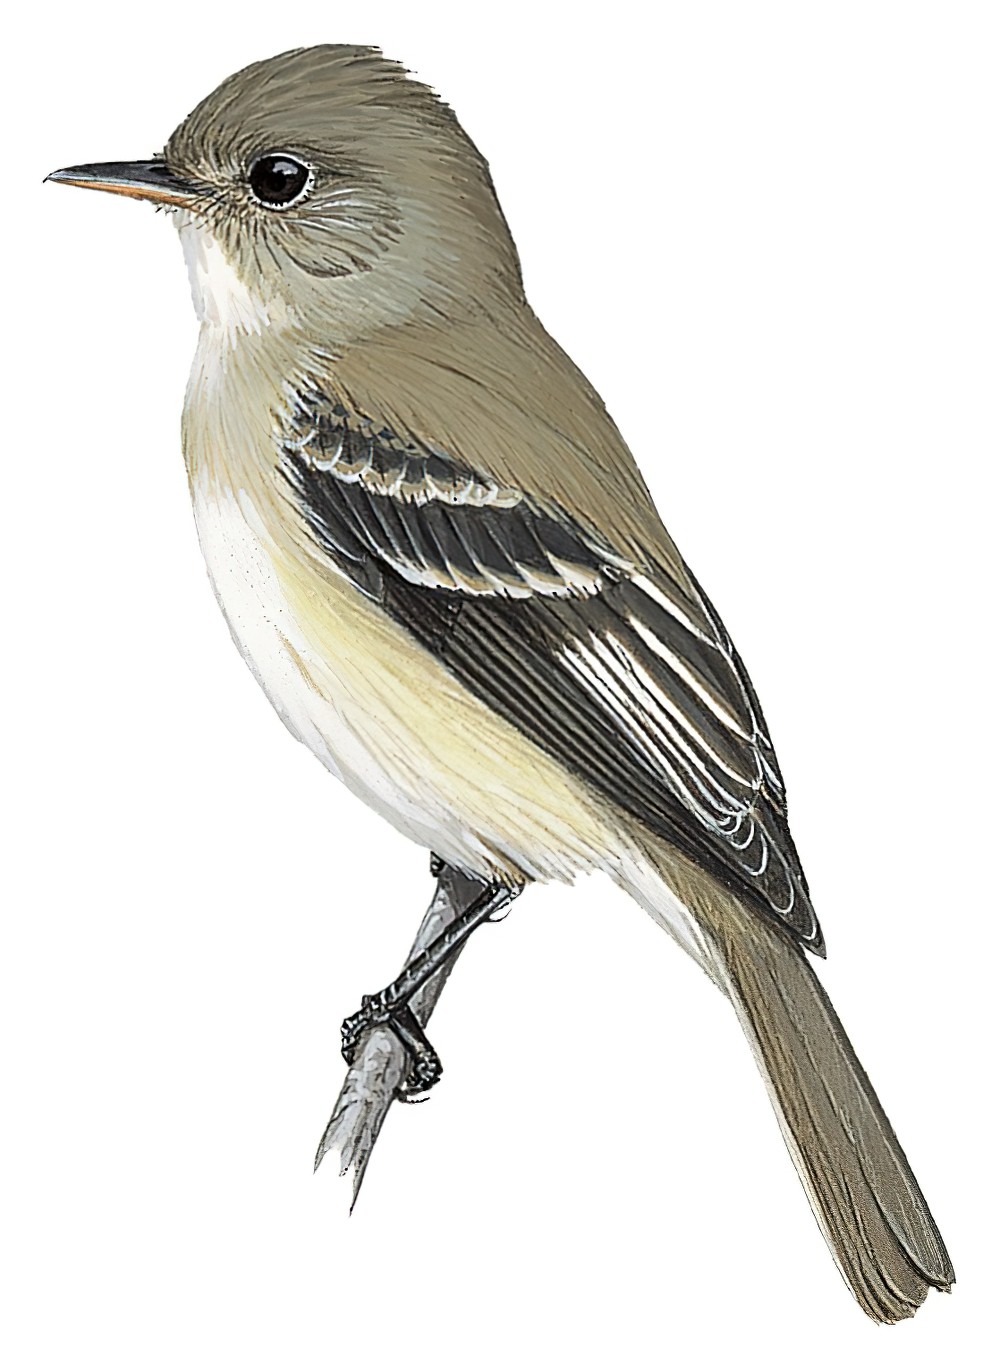 Willow Flycatcher / Empidonax traillii